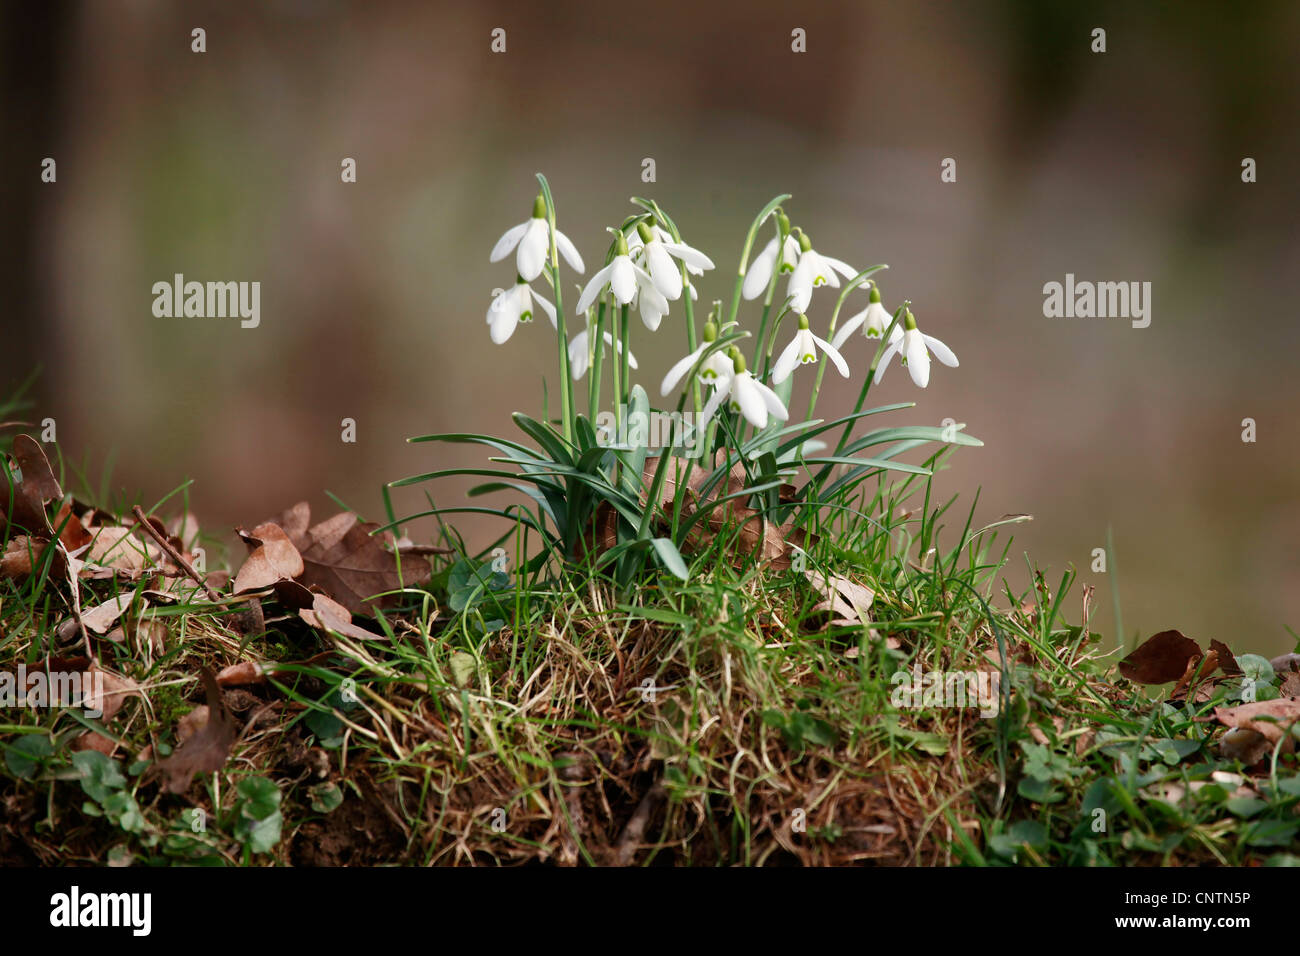 common snowdrop (Galanthus nivalis), flowering, Germany Stock Photo